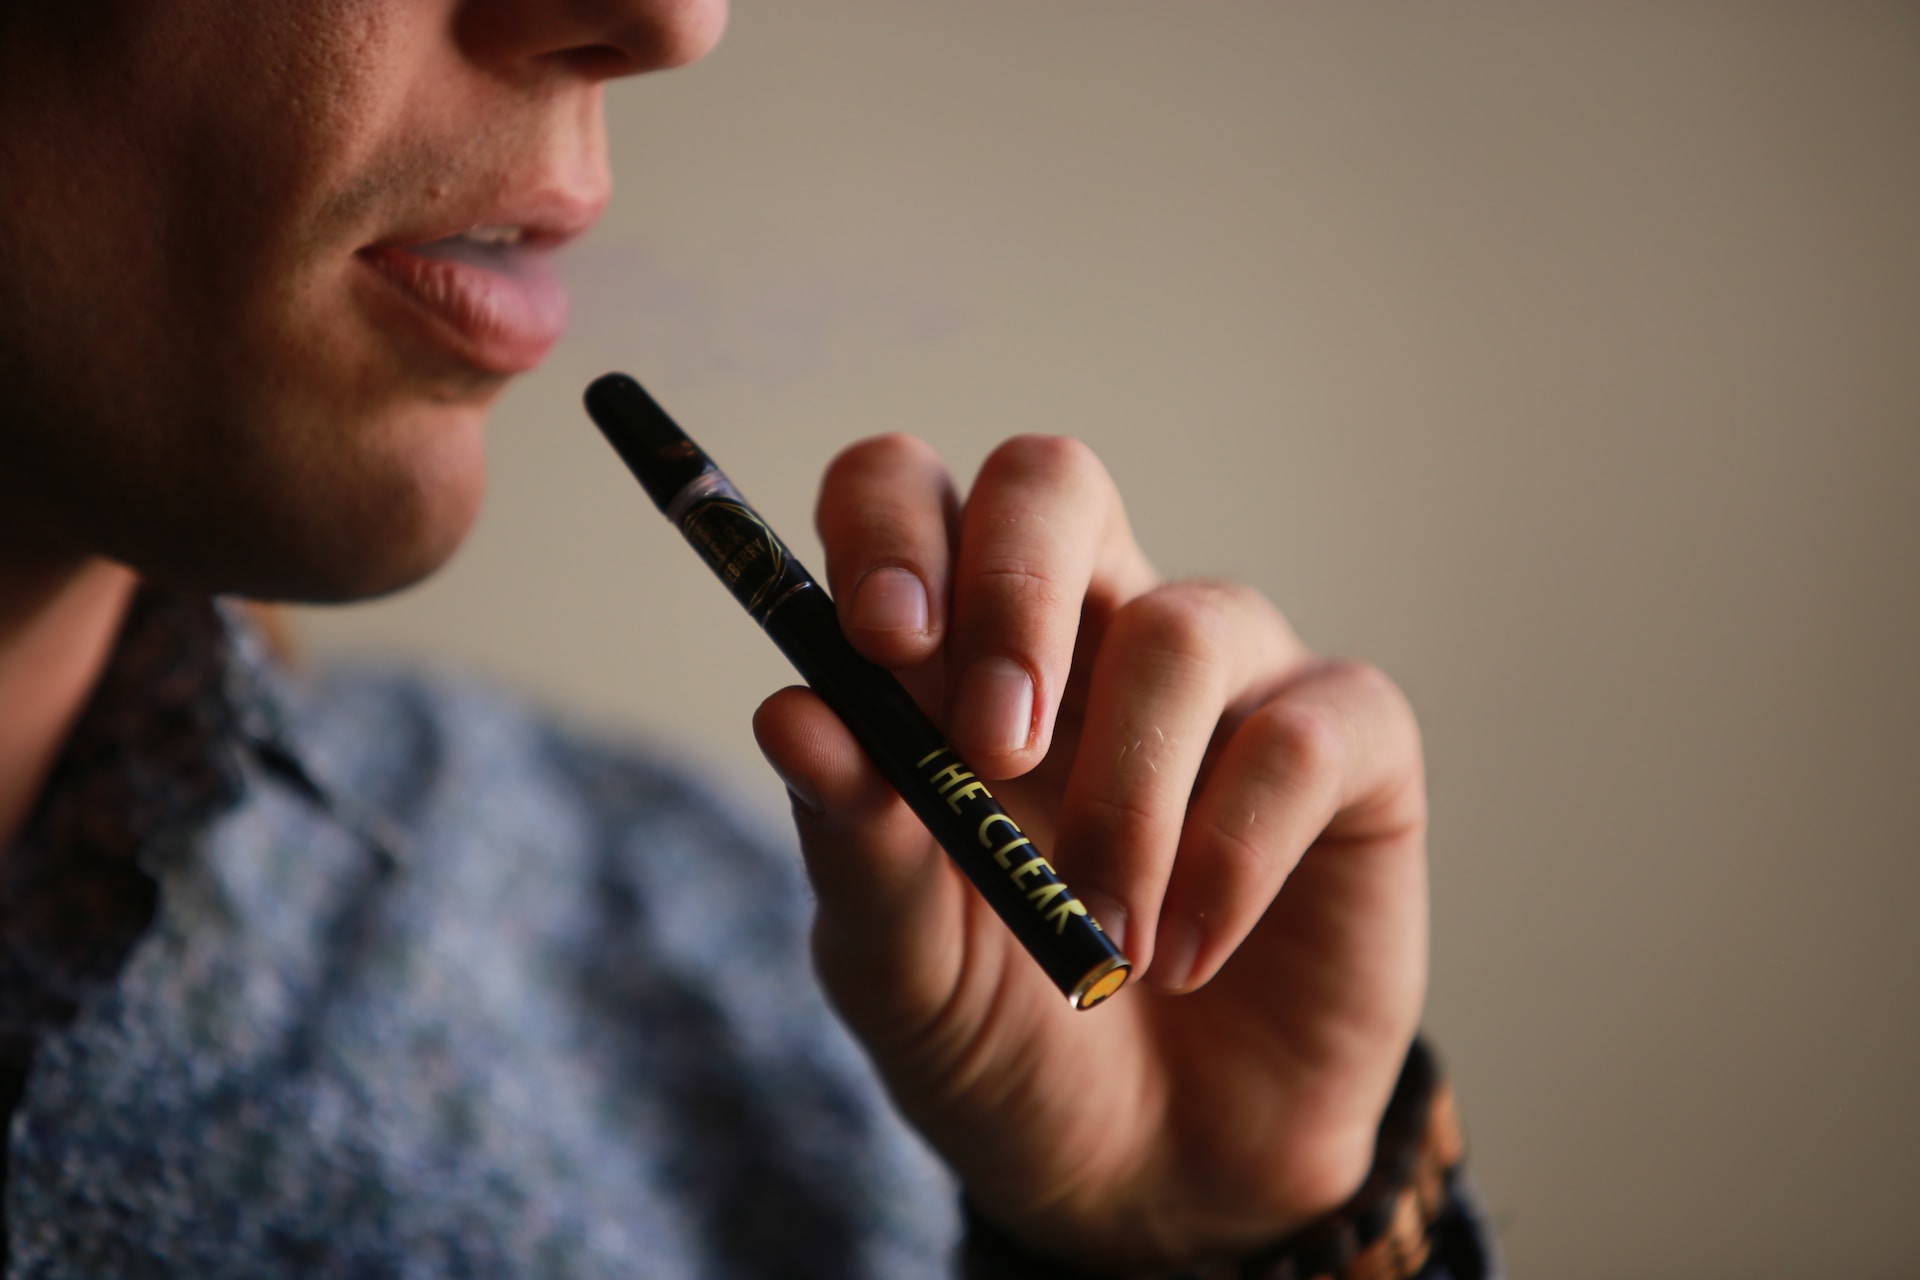 Man uses cannabis accessory to smoke